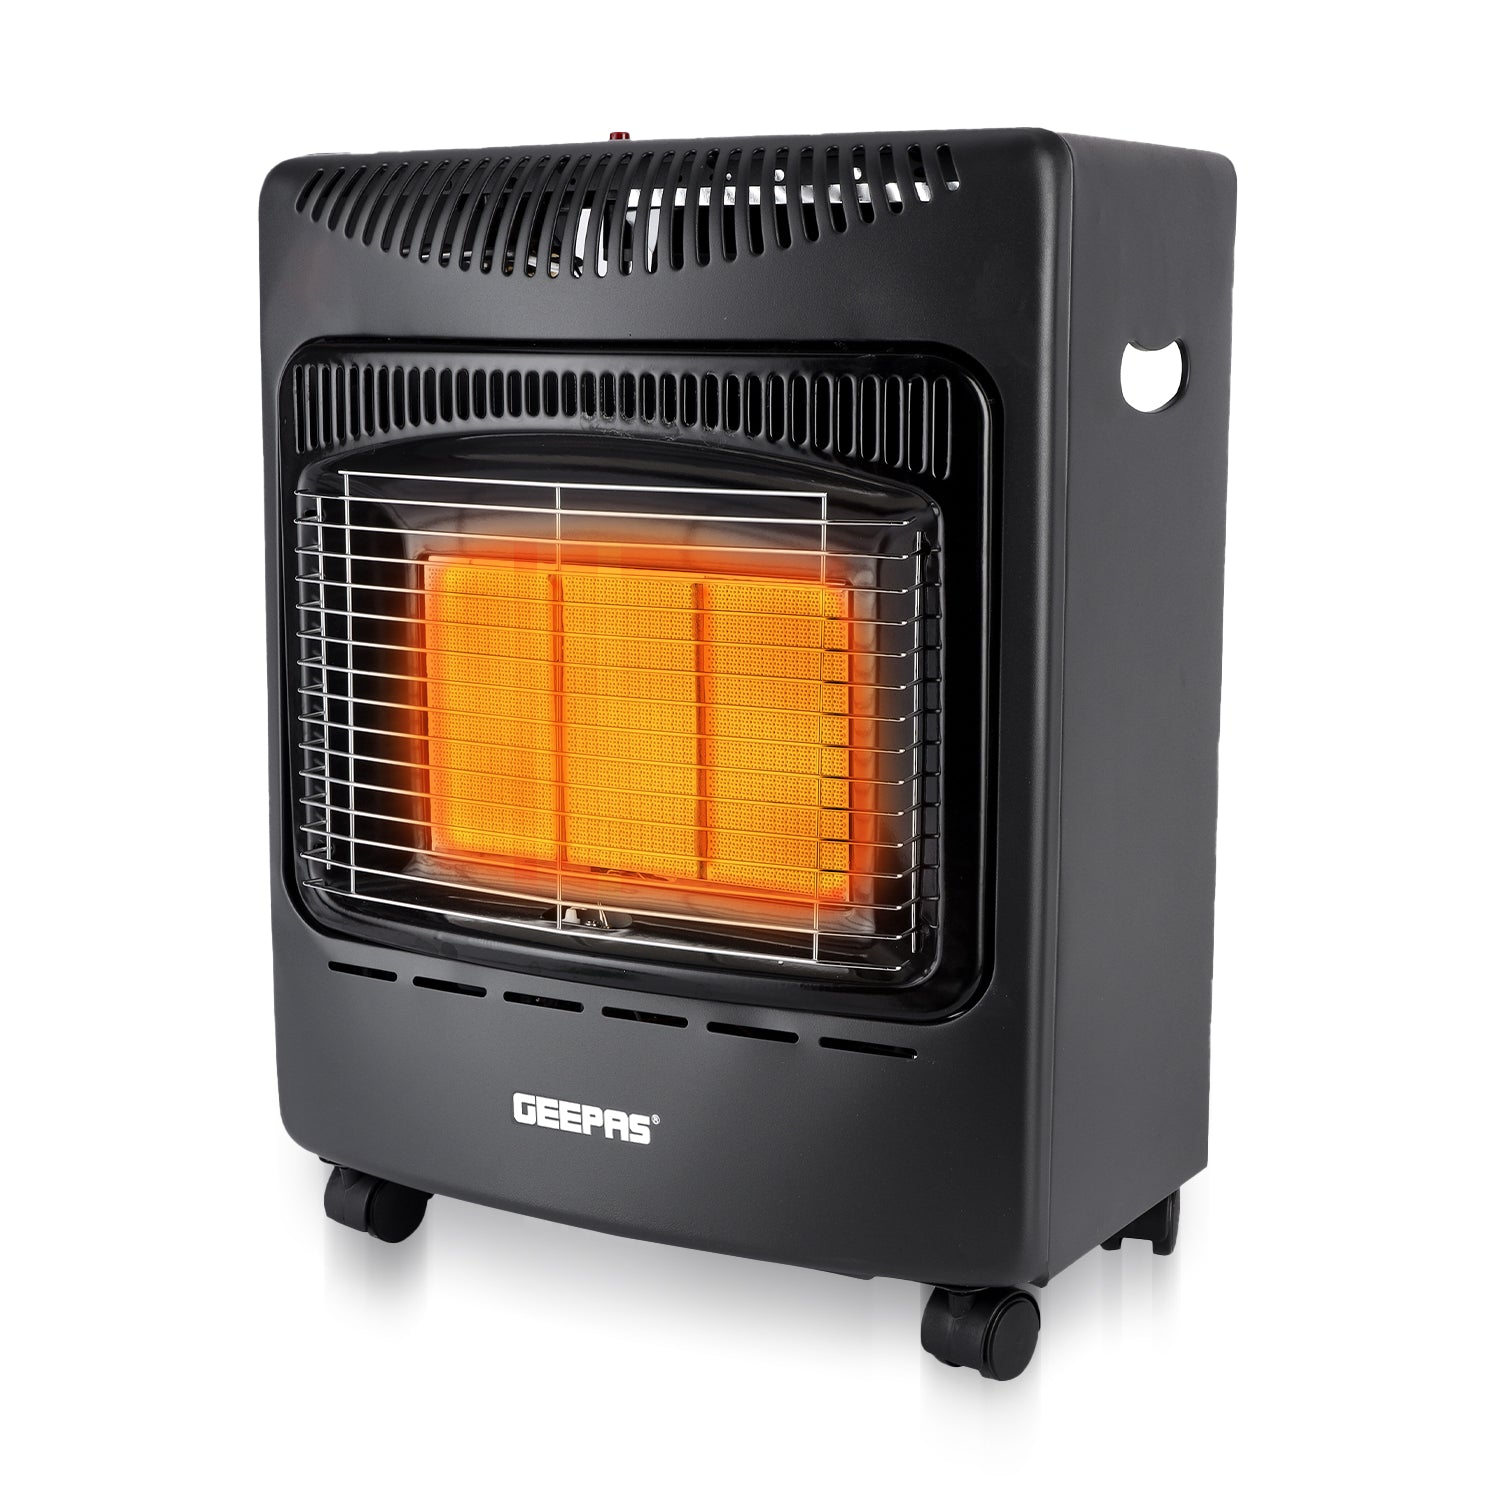 New Portable Indoor Heater 4.2kw - Home Butane Calor Gas Heating